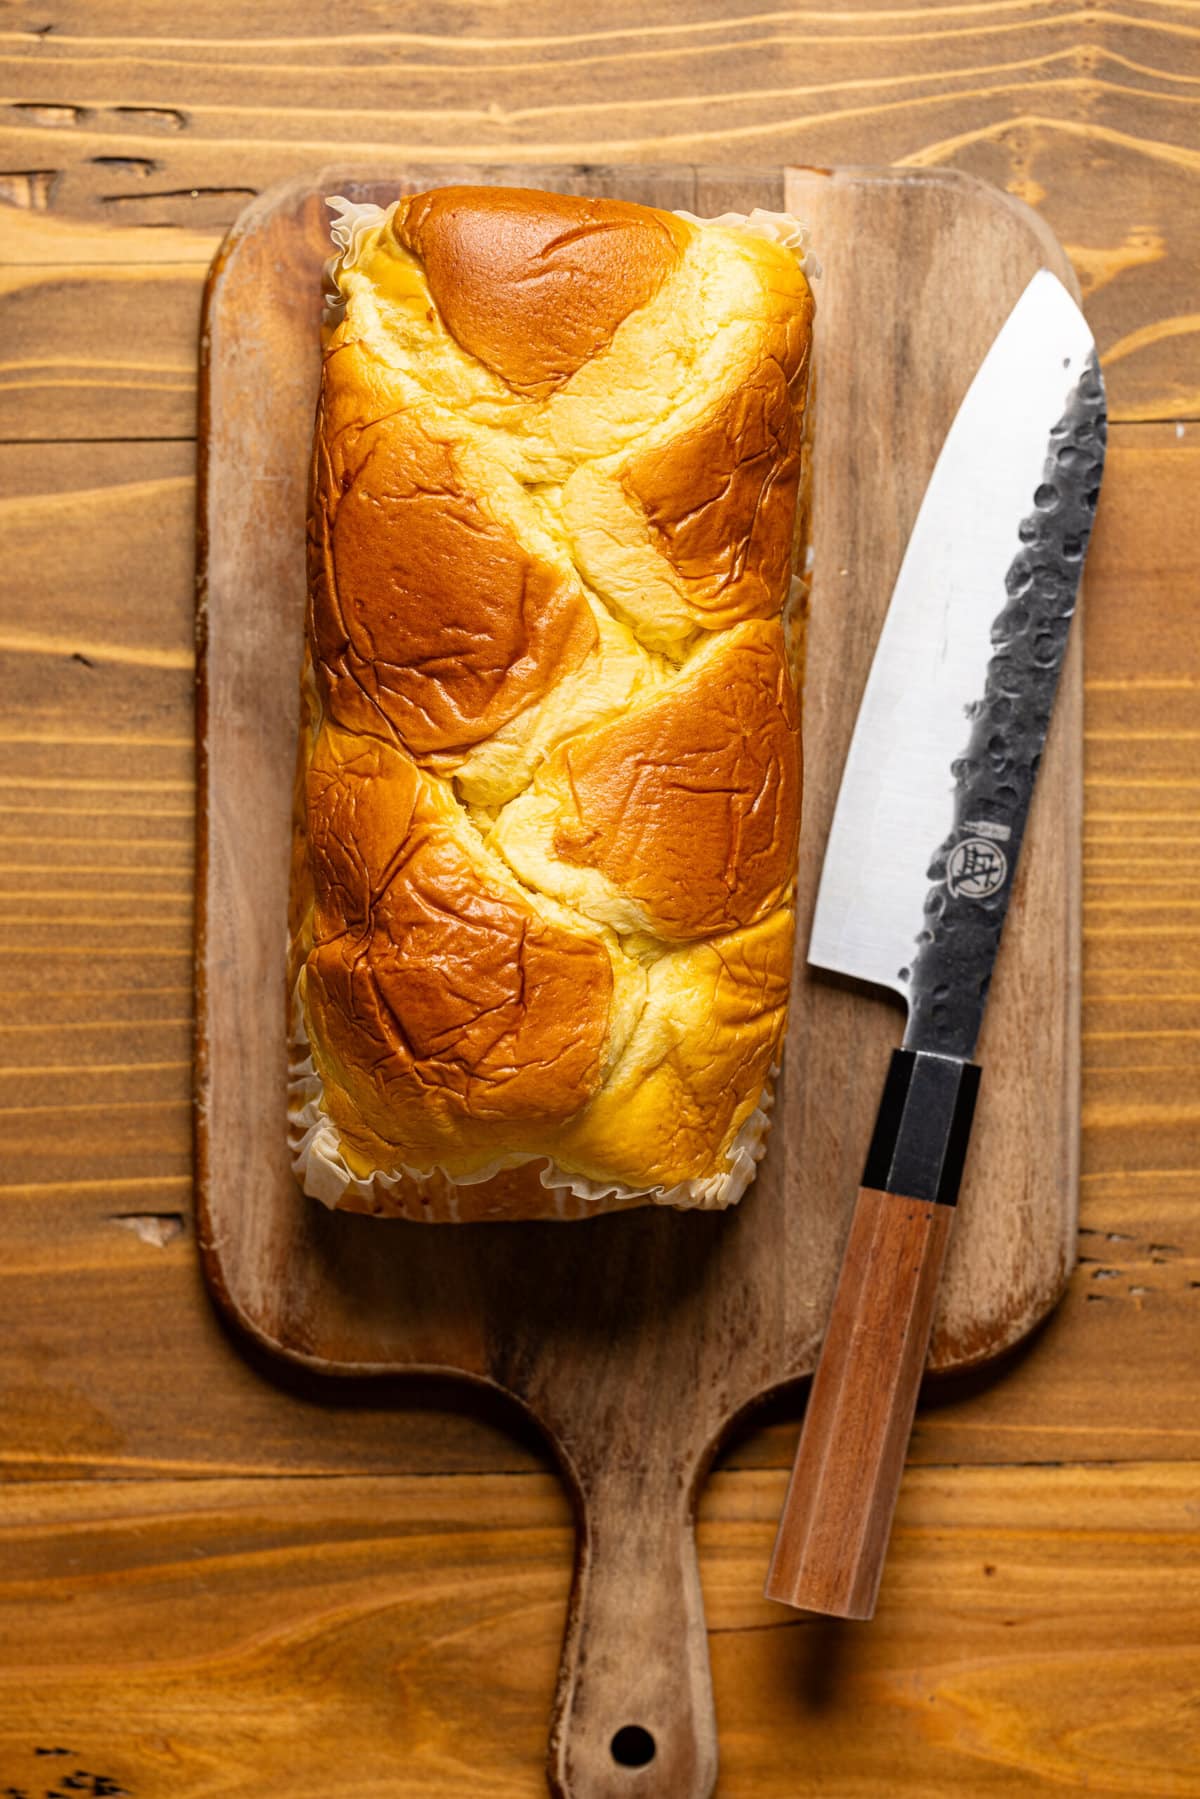 Brioche bread on a cutting board with a knife.